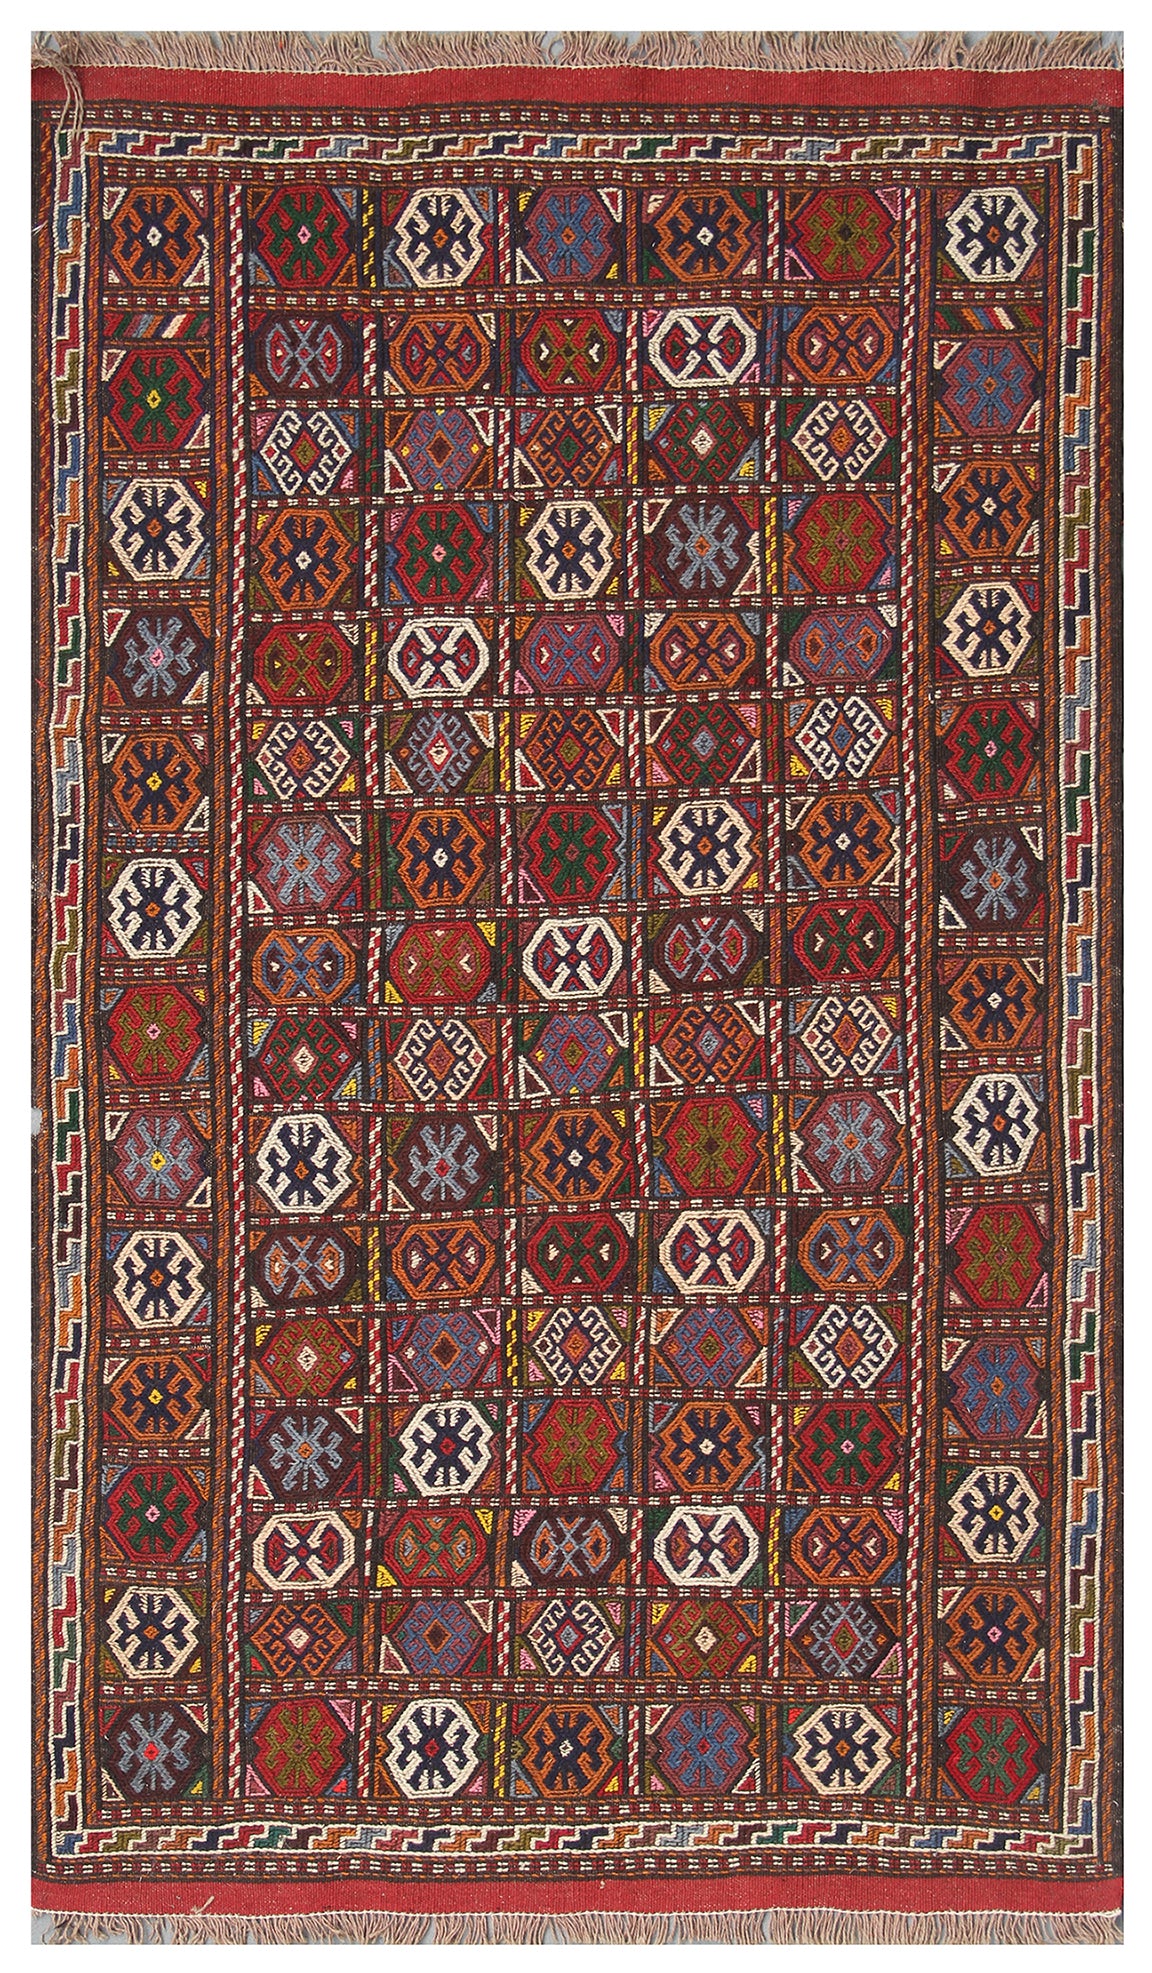 4'x6' Vintage Soumak Embroidered Persian Qutchan Tribal Kilim